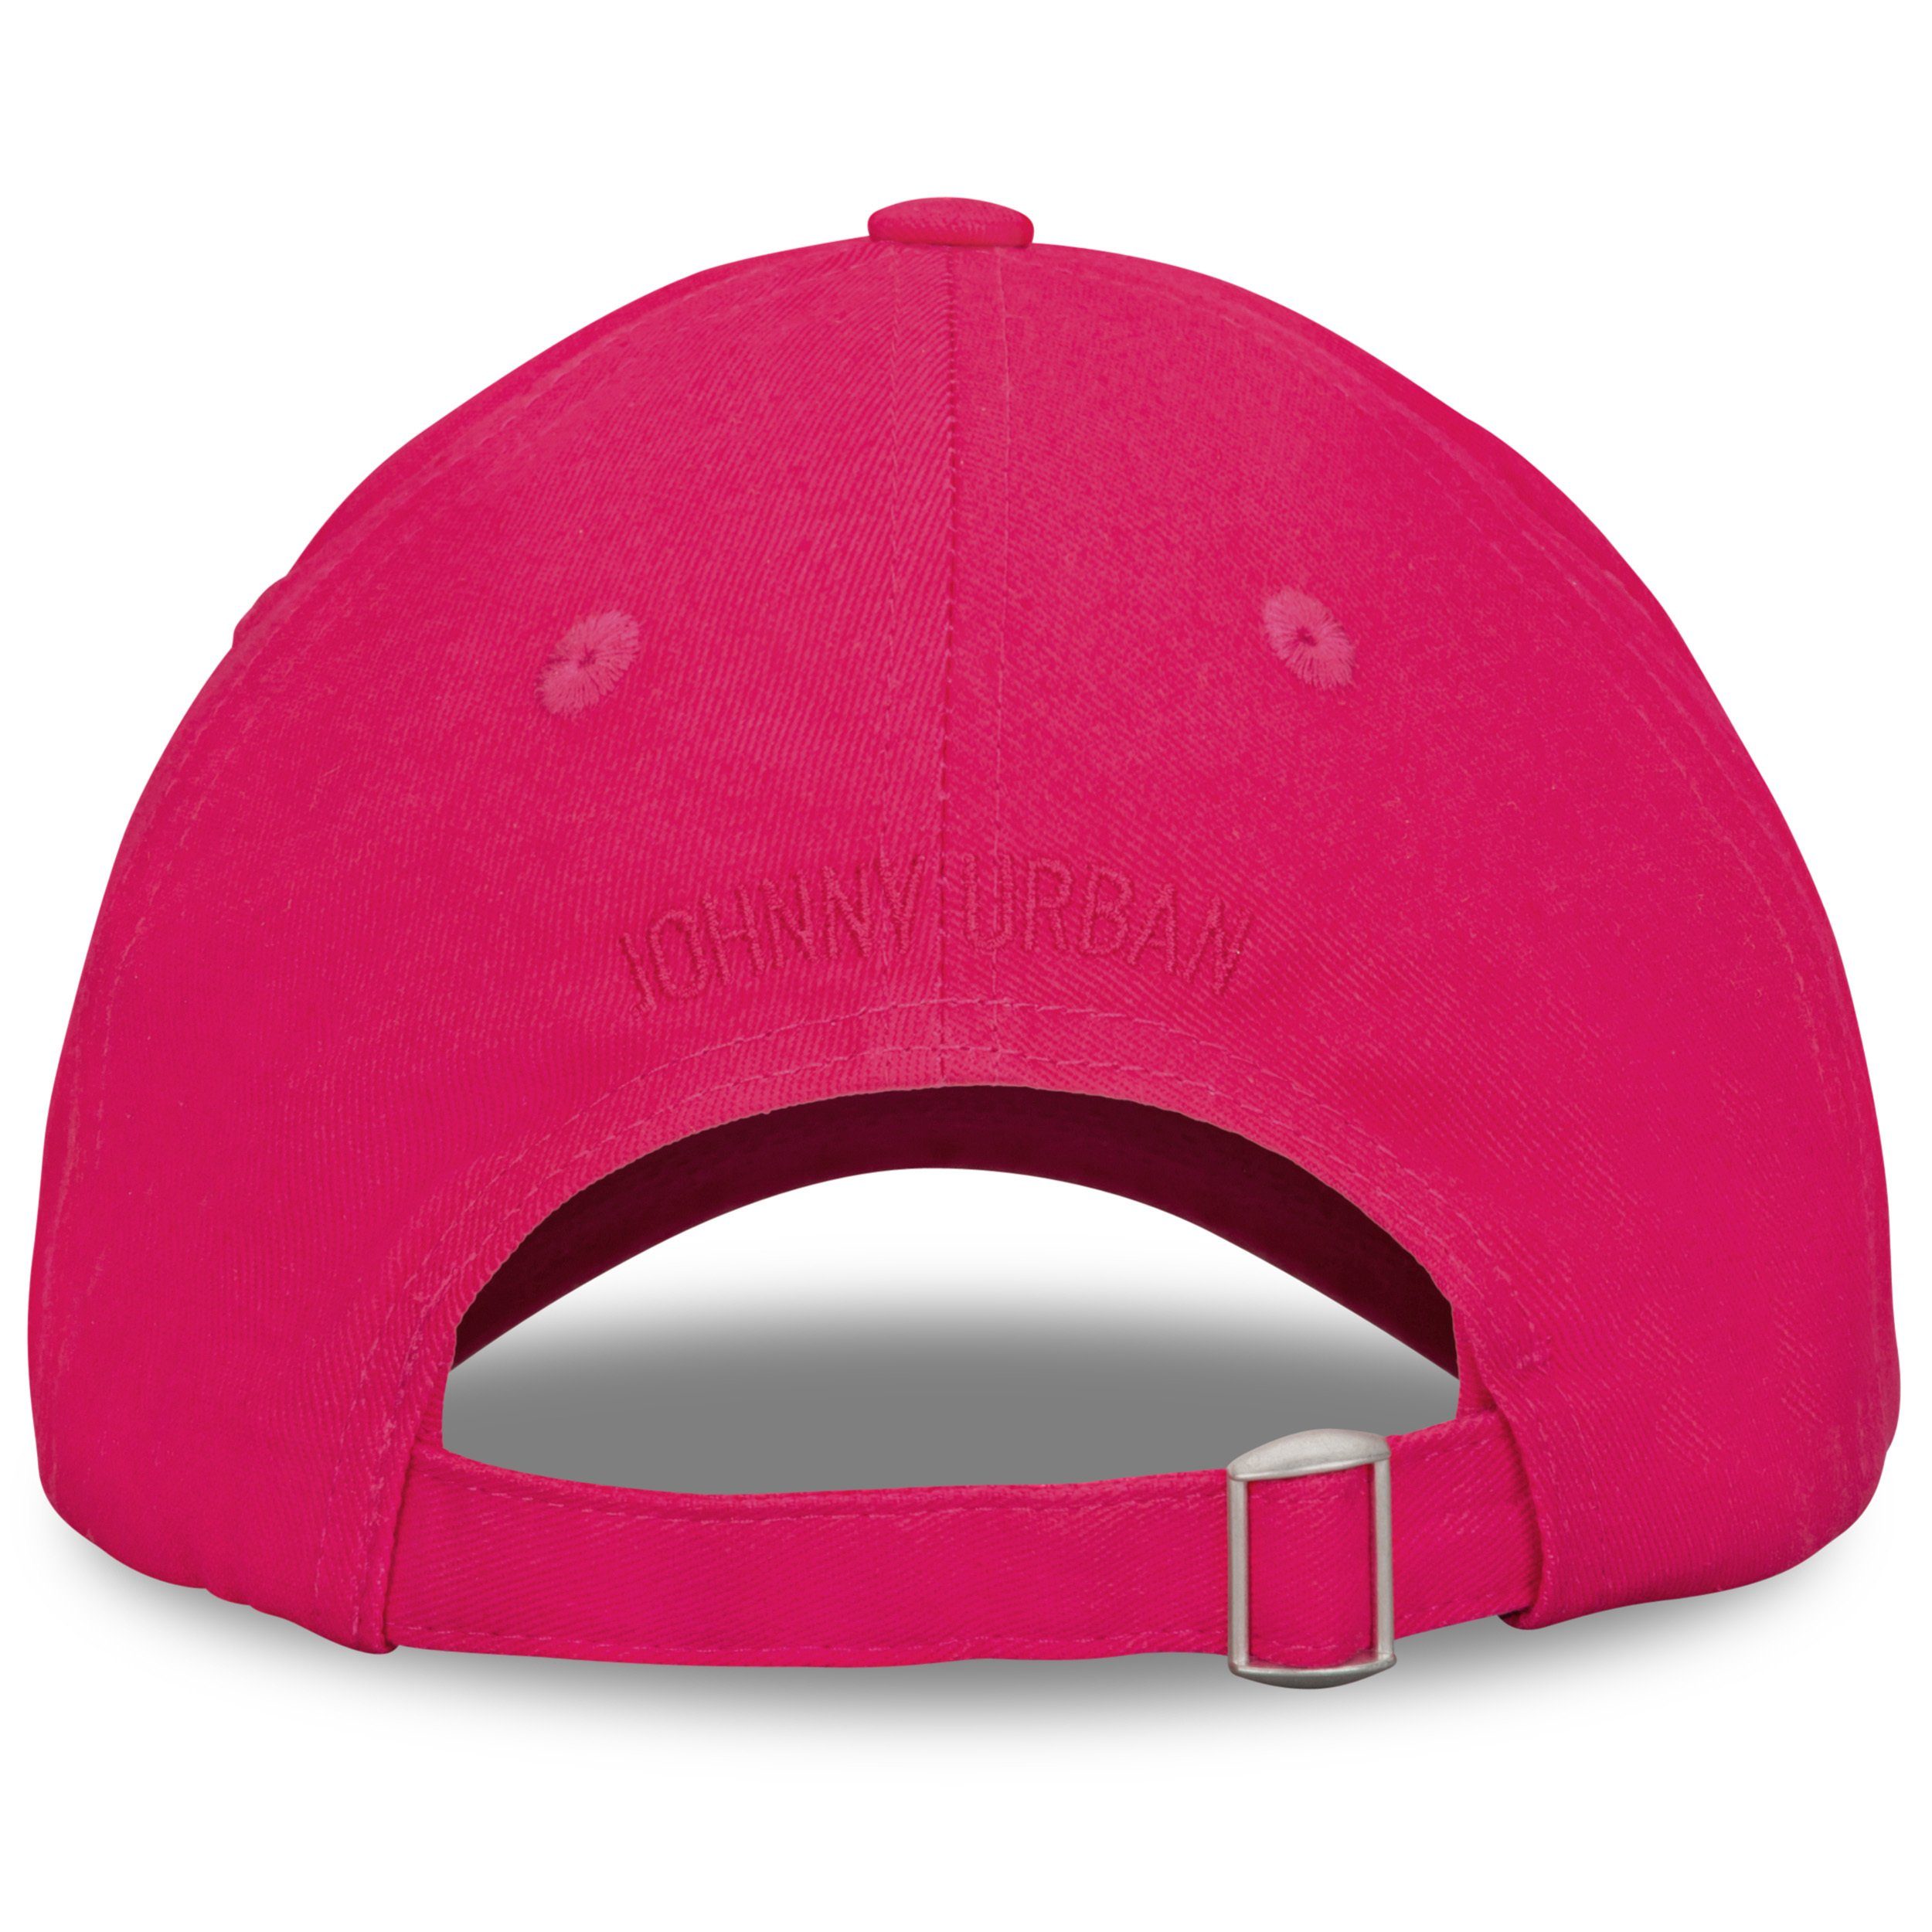 Johnny Urban Basecap Herren Unisex Pink Cap Damen Größenverstellbar, Jen Cap Snapback